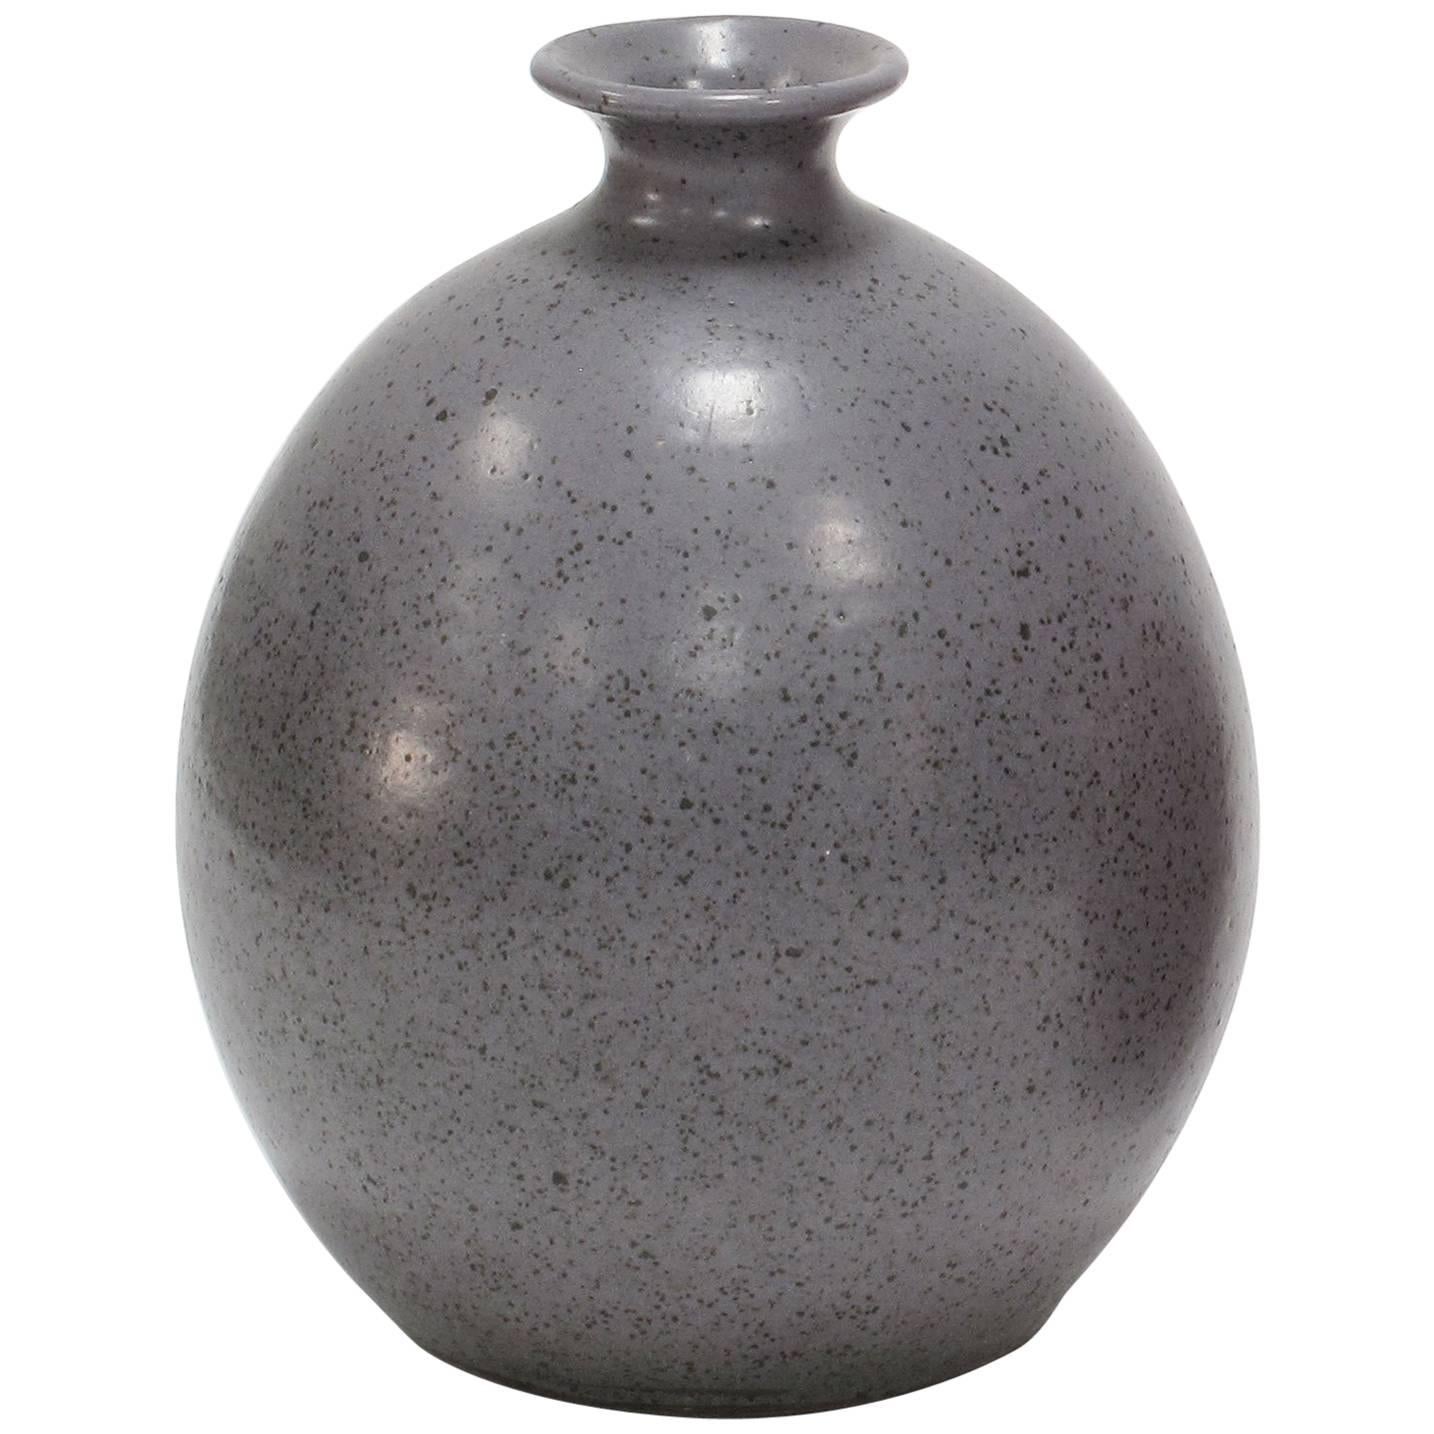 David Cressey Ceramic Vase, Glazed Purple, 1970s, Earthgender Ceramics For Sale